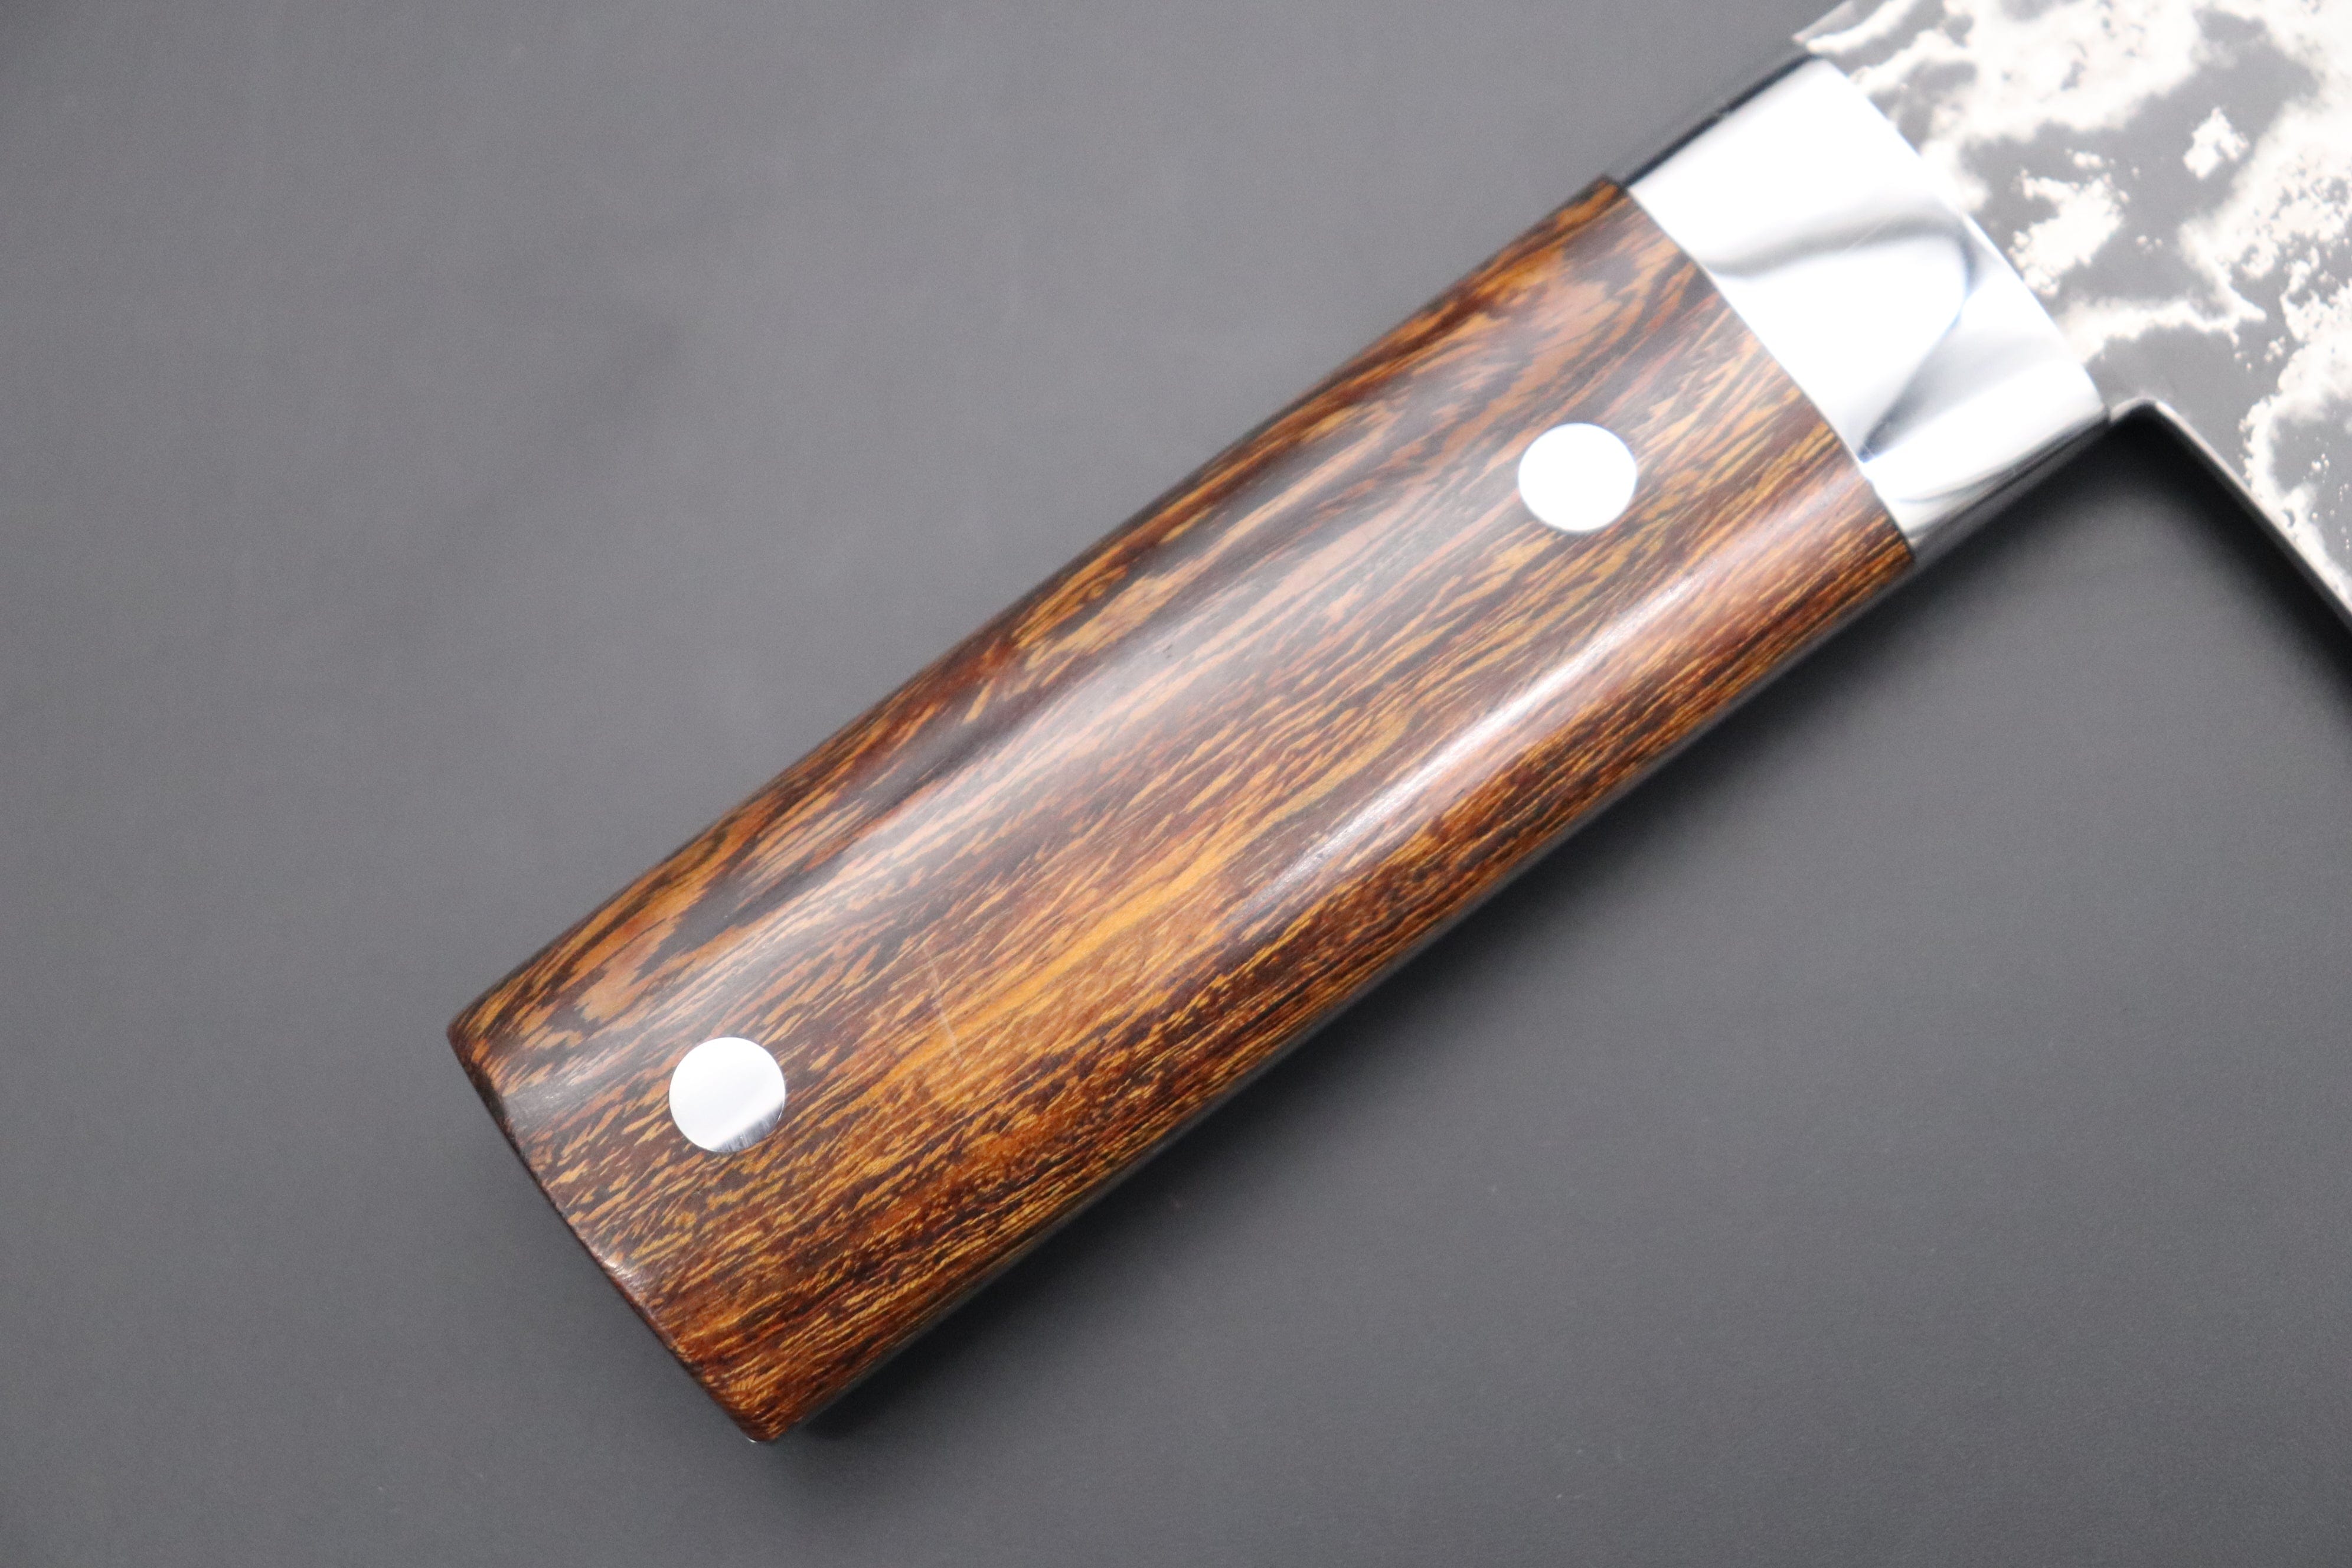 Misono Molybdenum Fruit Knife with Wooden Saya Sheath